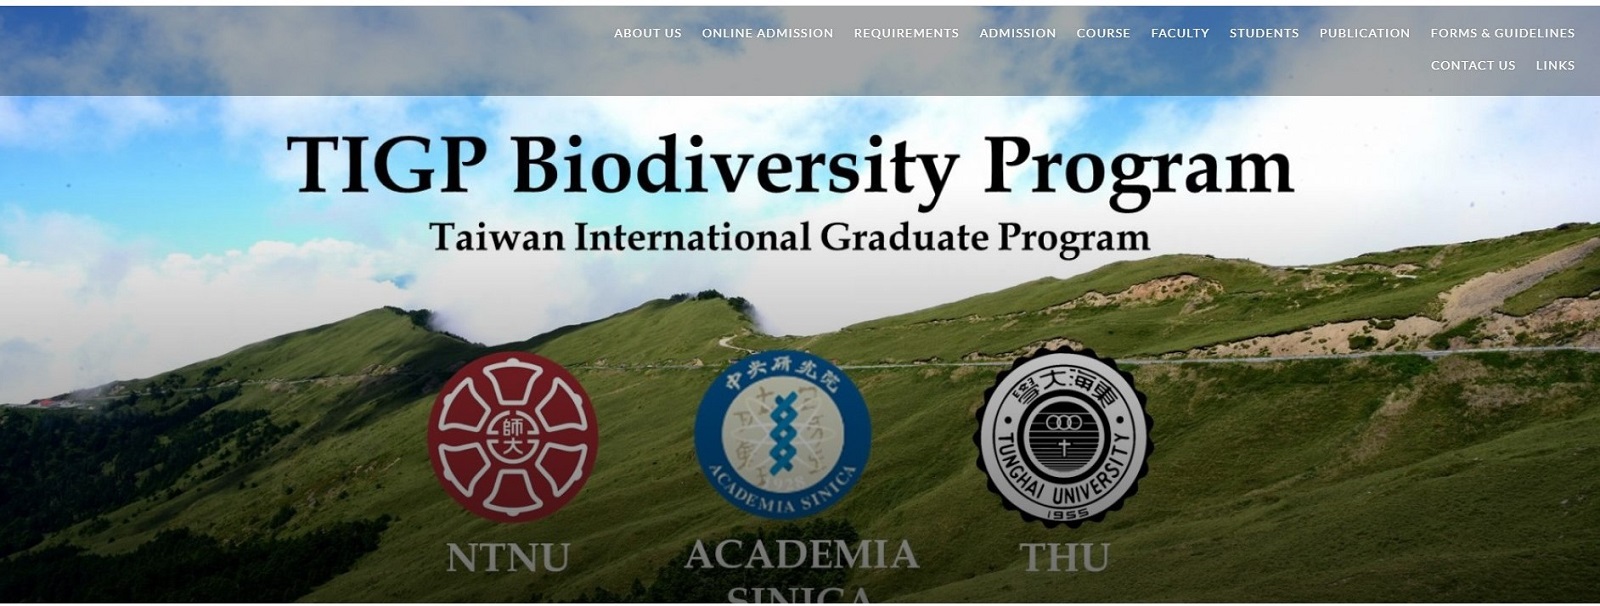 TIGP Biodiversity Program